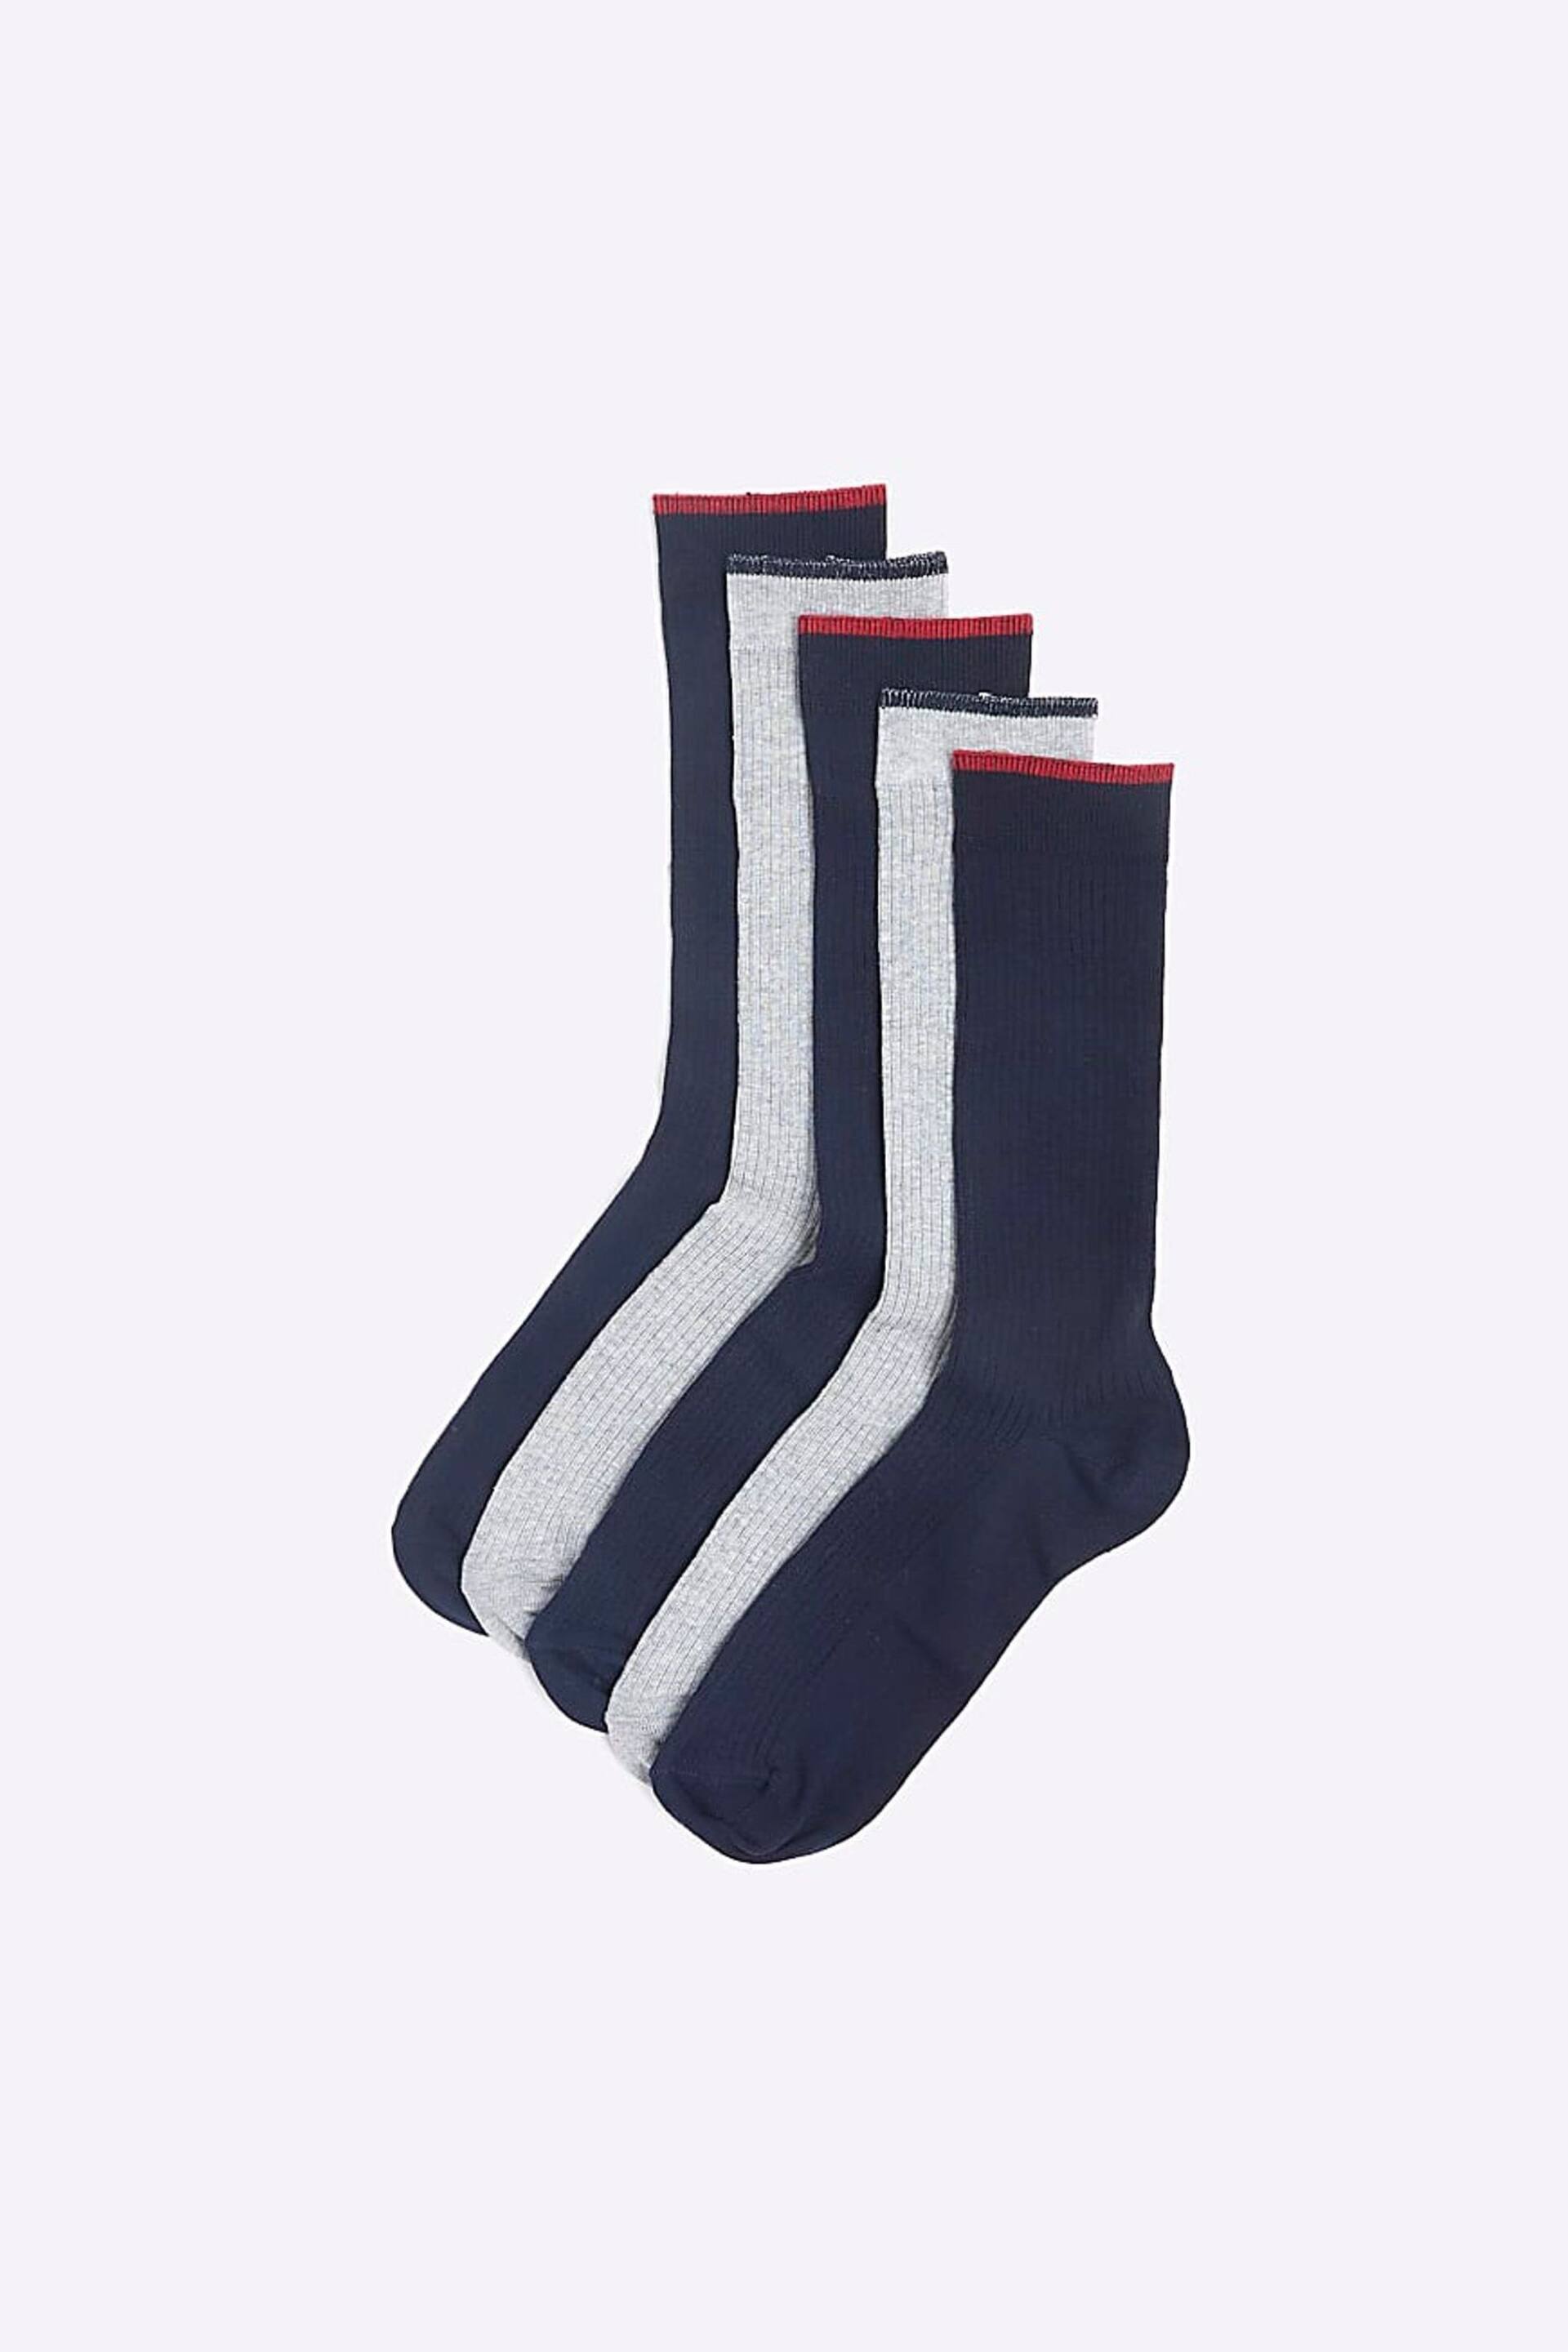 River Island Grey Rib Multipack of 5 Ankle Socks - Image 1 of 3